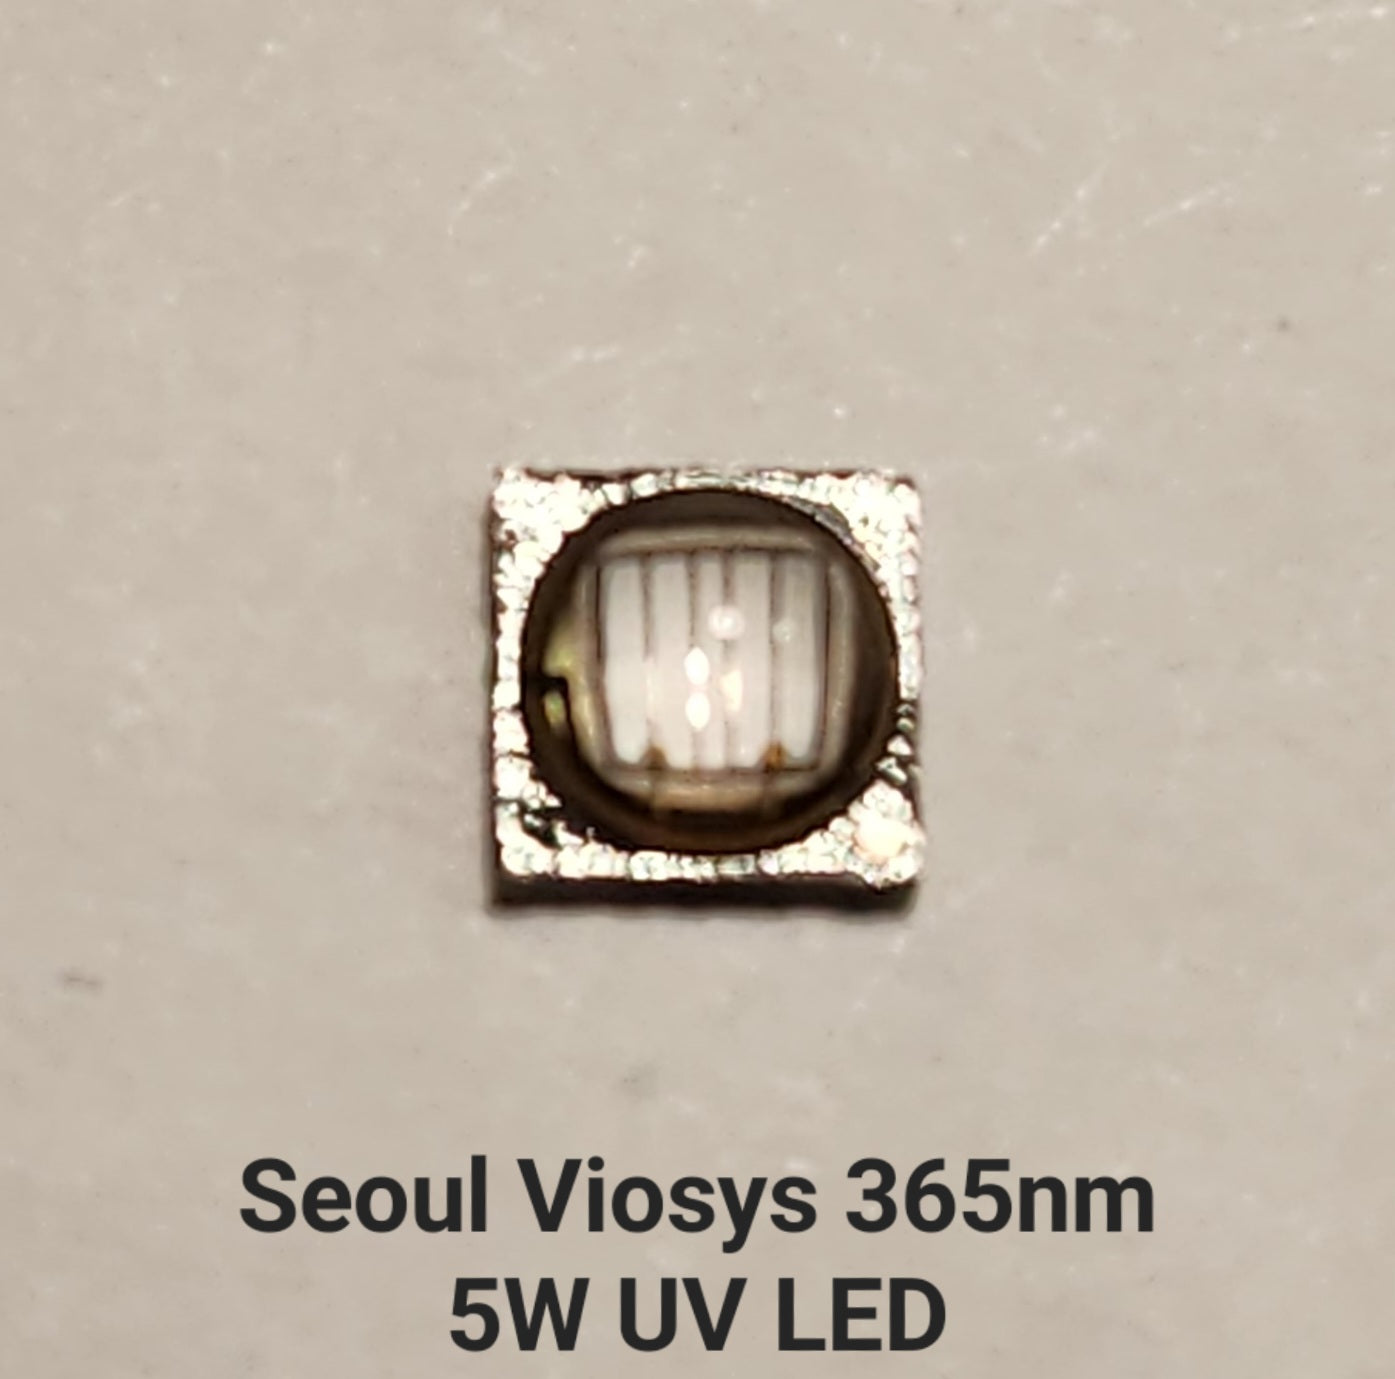 UV LED RAW LED EMITTER MCPCB 365NM